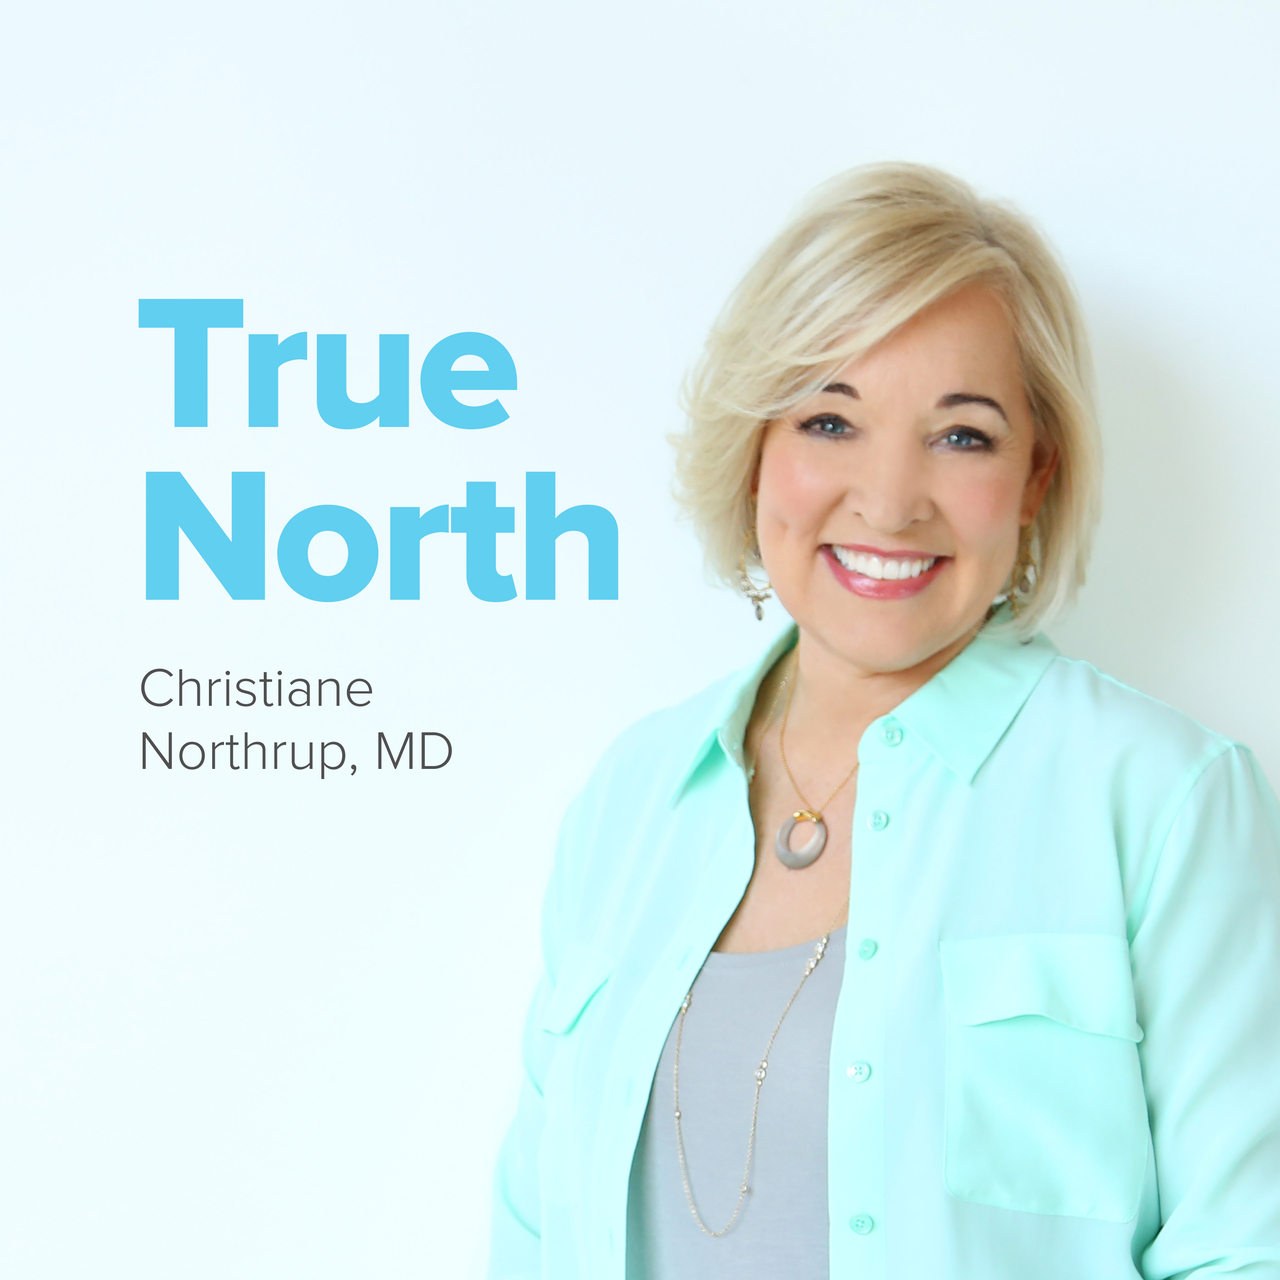 True North by Christiane Northrup, M.D.